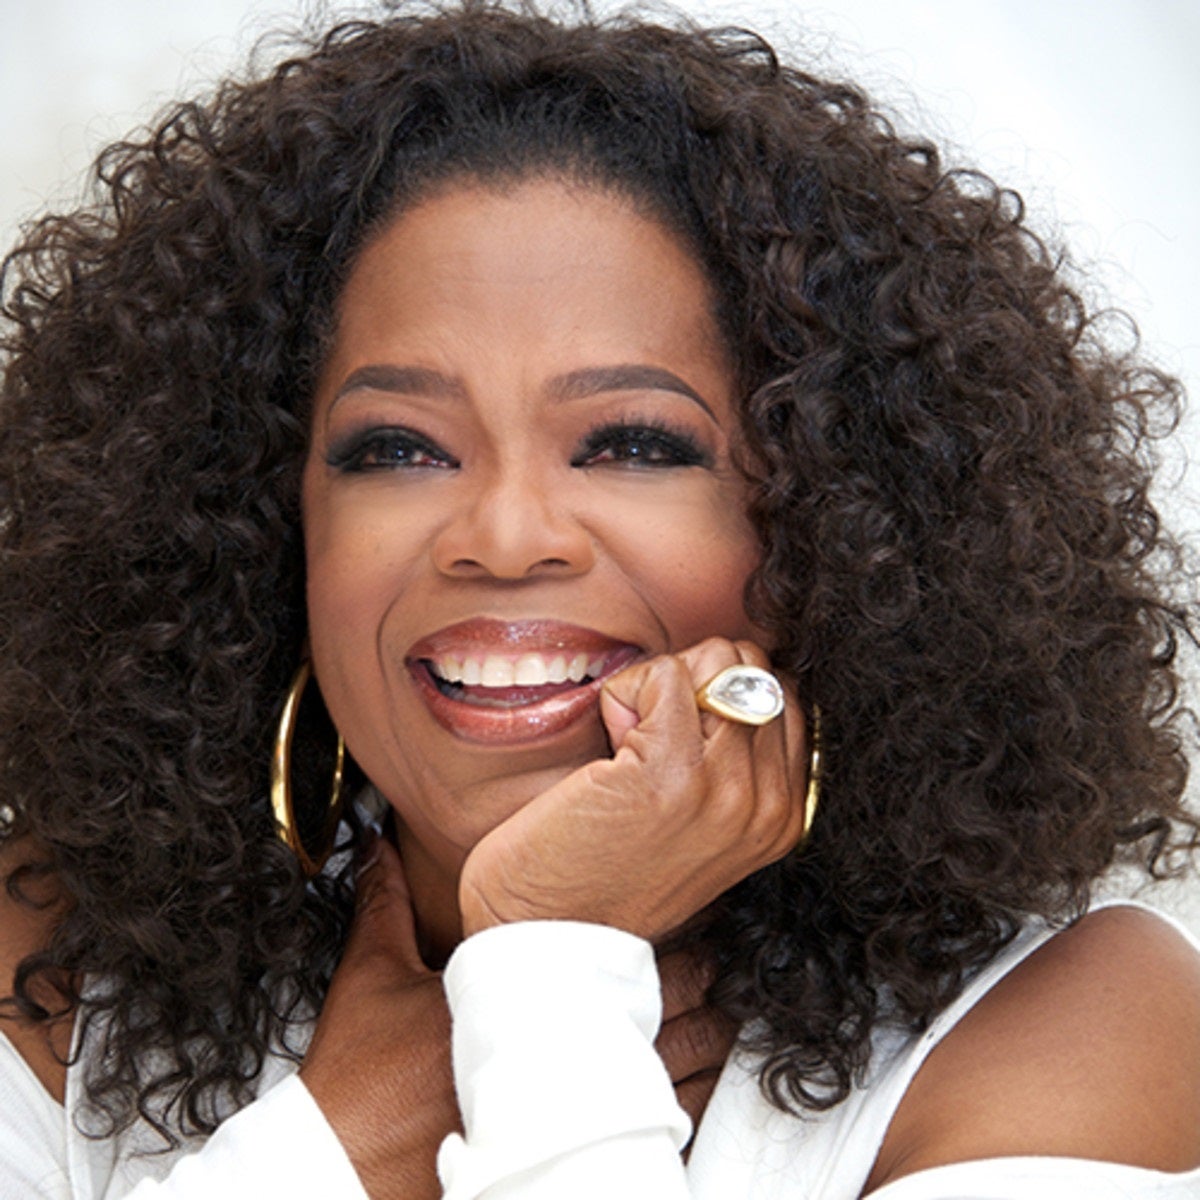 Oprah Winfrey’s “The Books That Help Me Through” cover